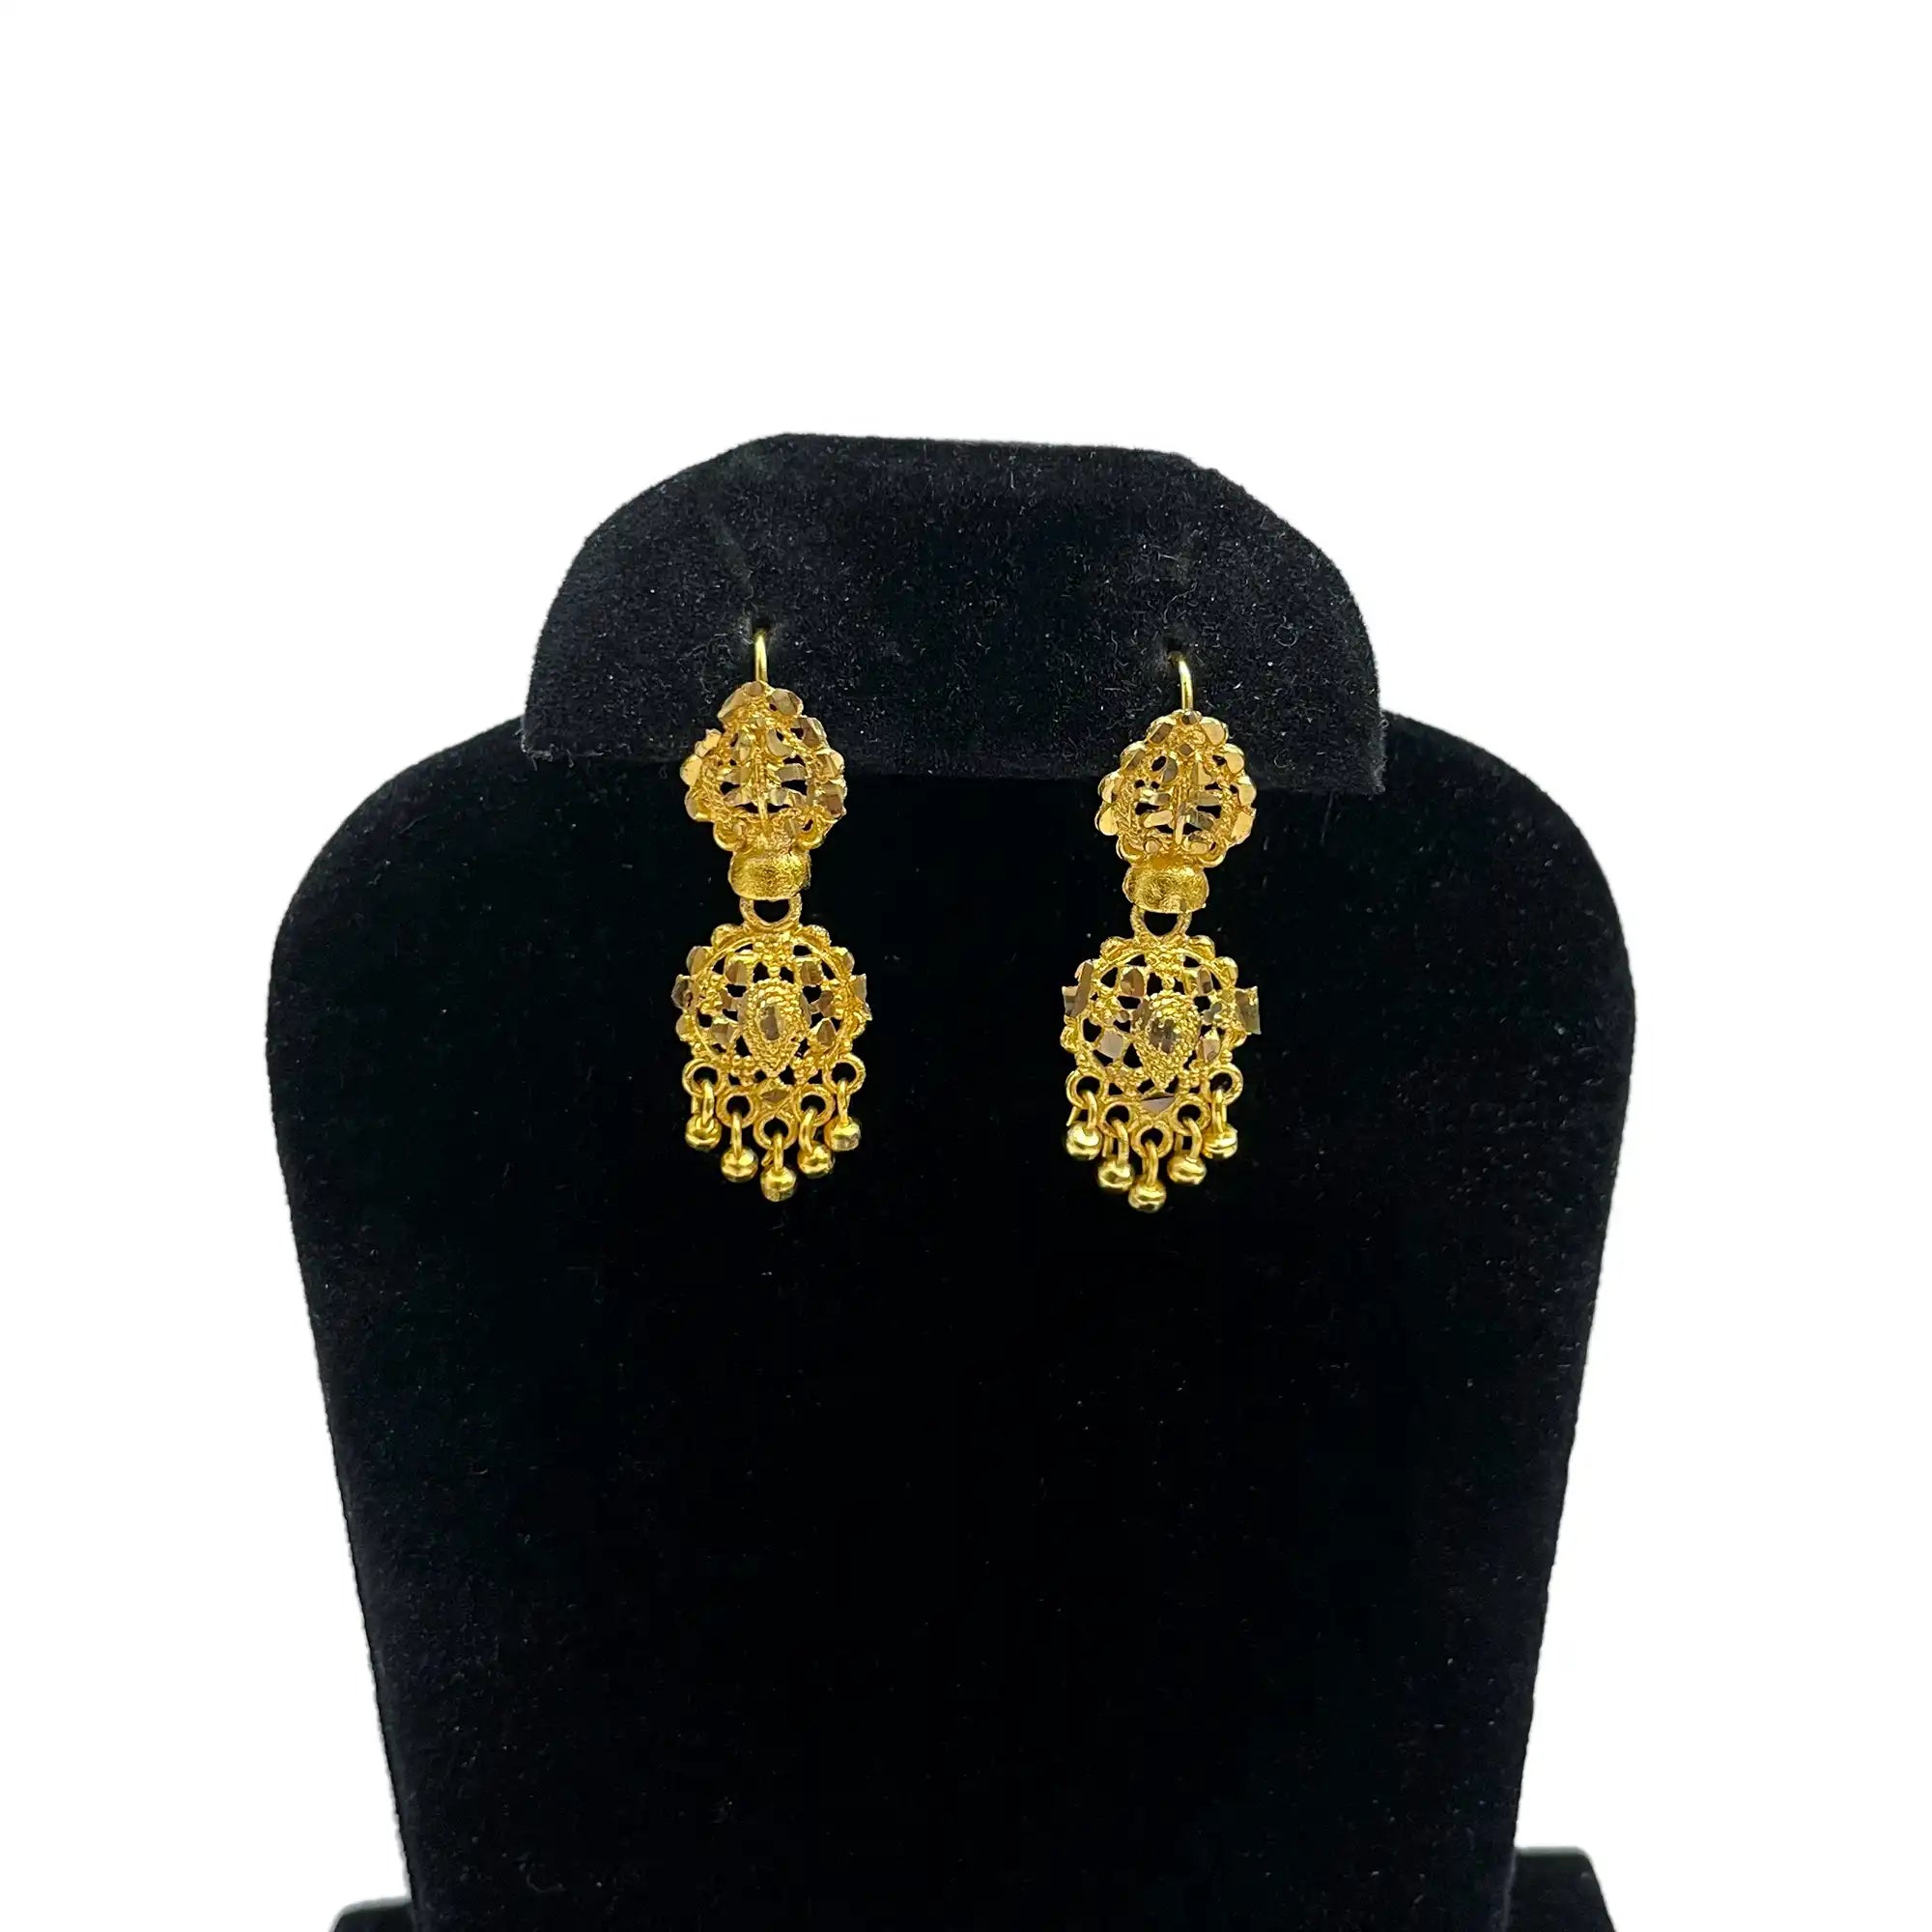 22K gold plated earrings, drop earrings, gift for her